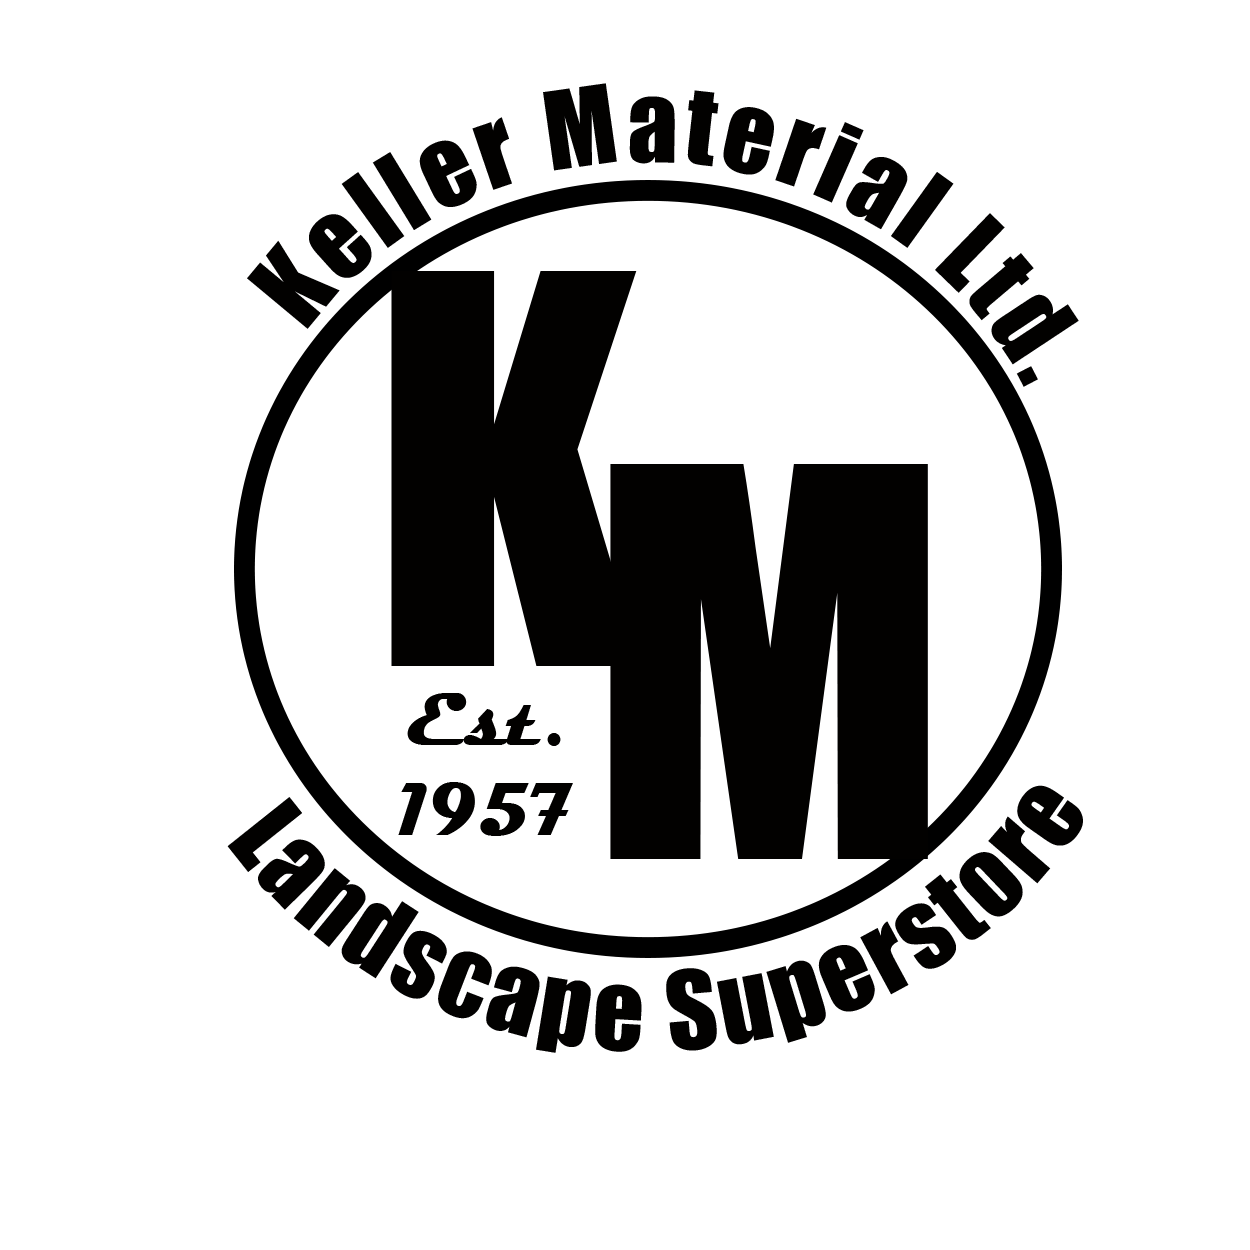 Business logo of Keller Material, Ltd. - Stone and Landscape Superstore